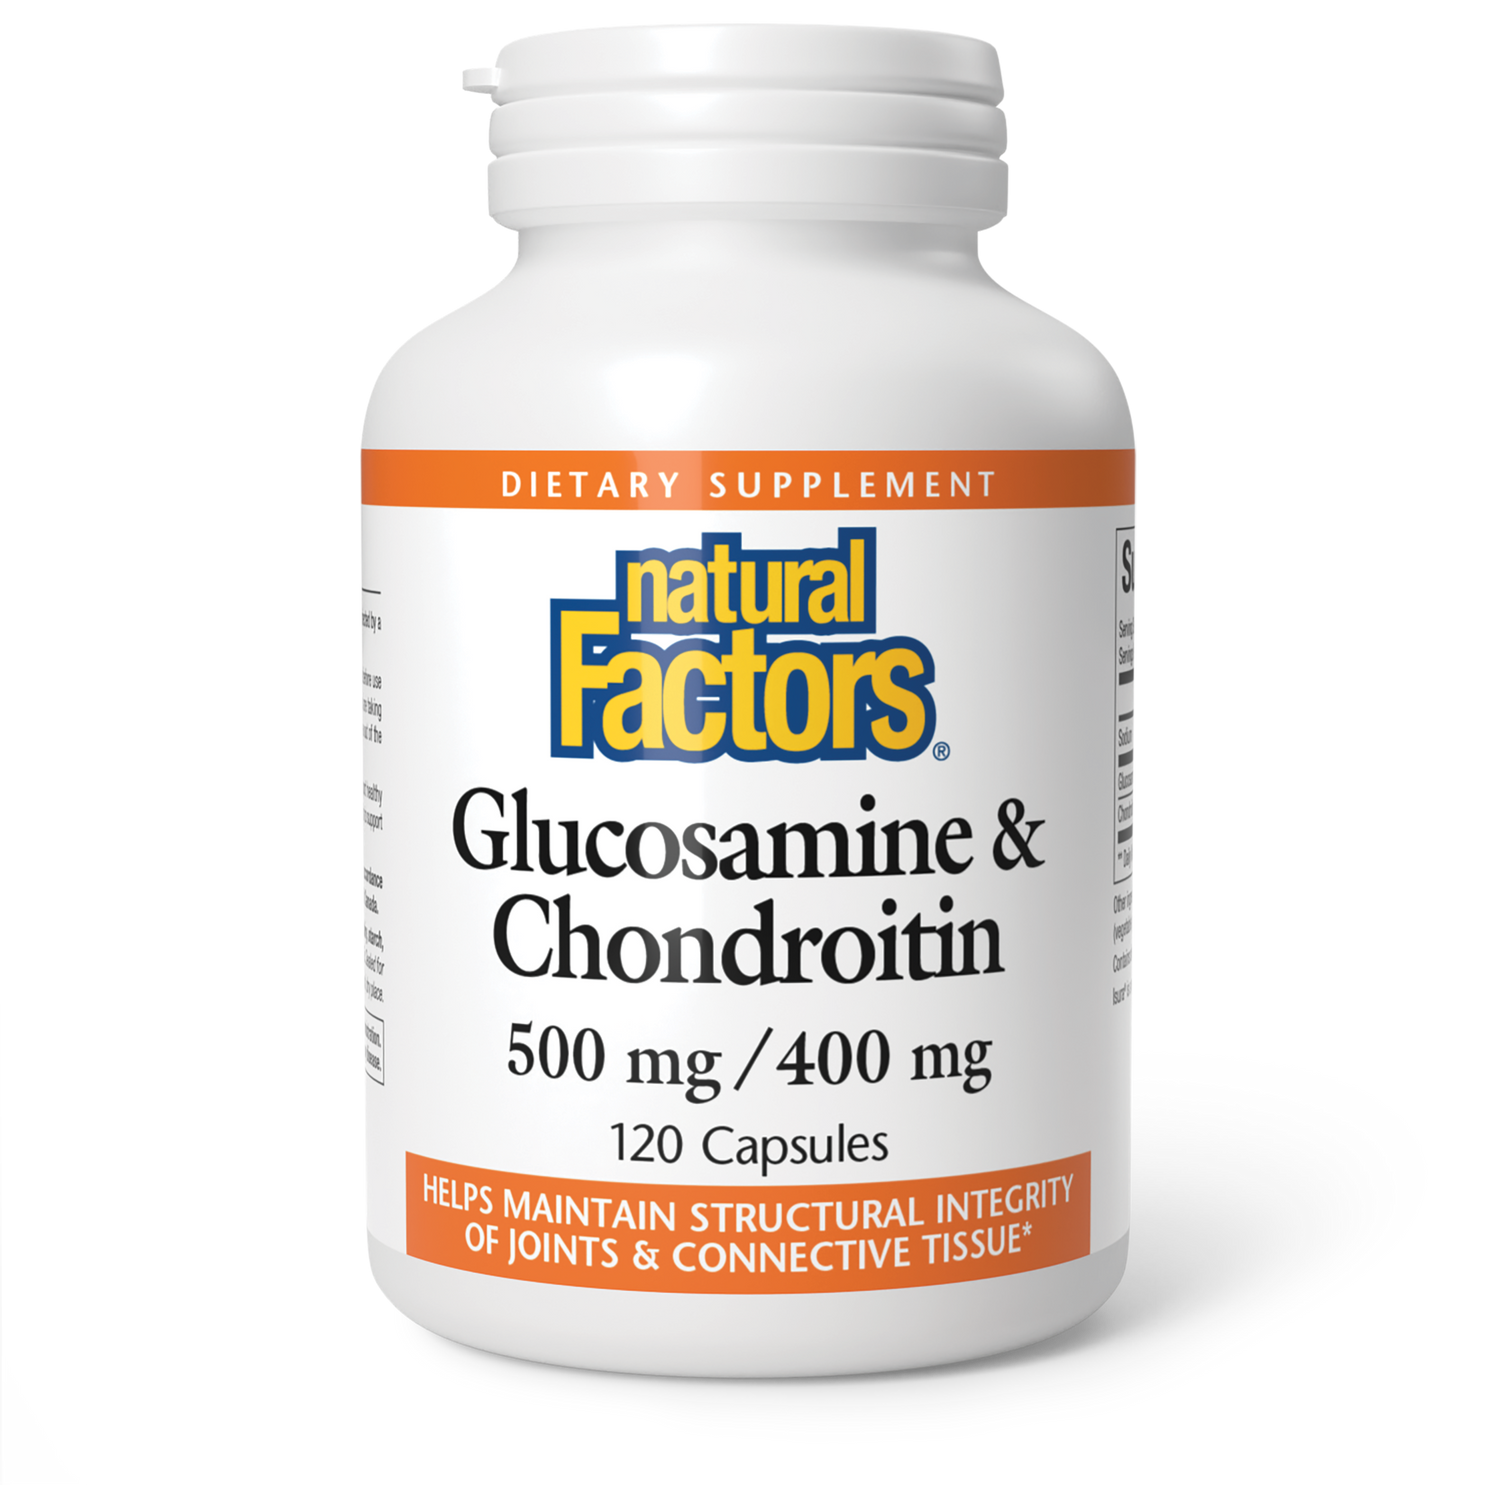 Glucosamine & Chondroitin|variant|hi-res|2687U